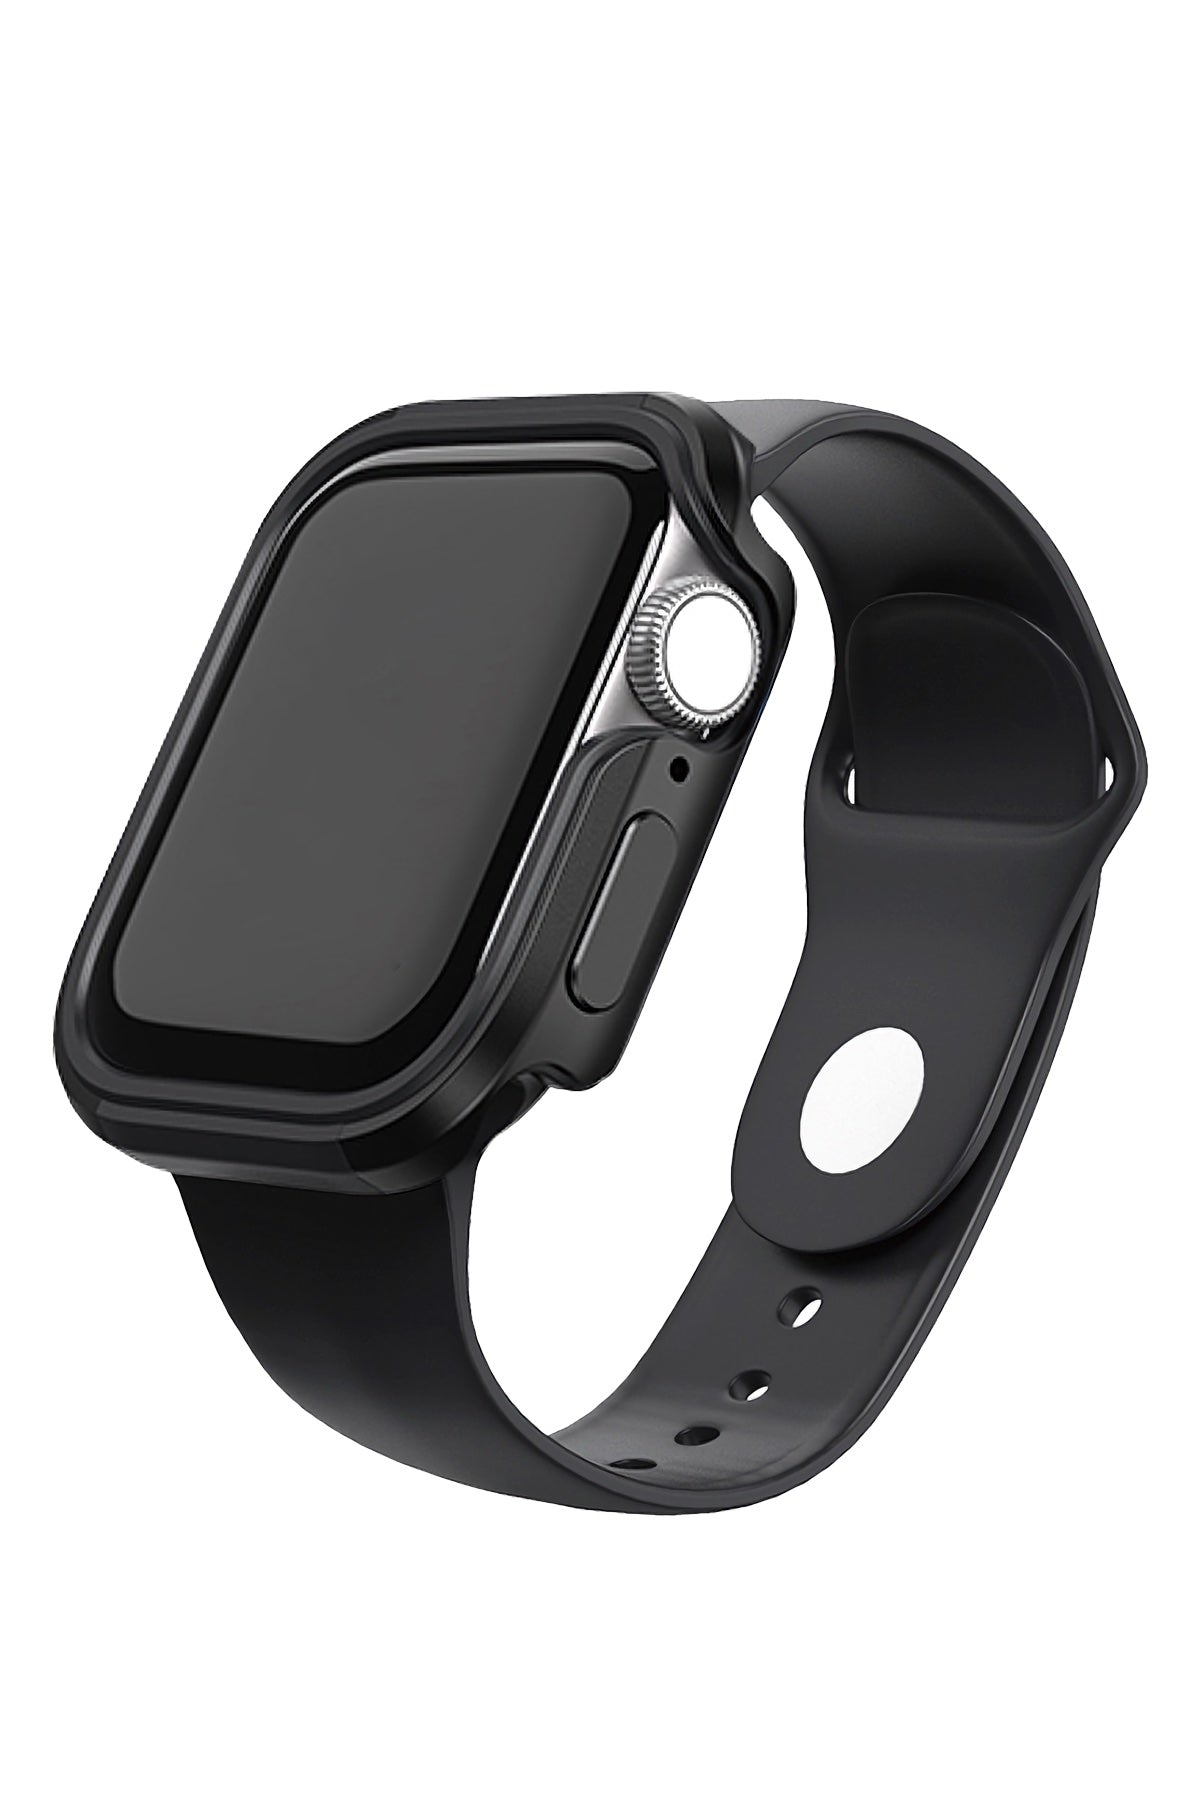 Wiwu Defense Apple Watch Compatible Case Protector Black 